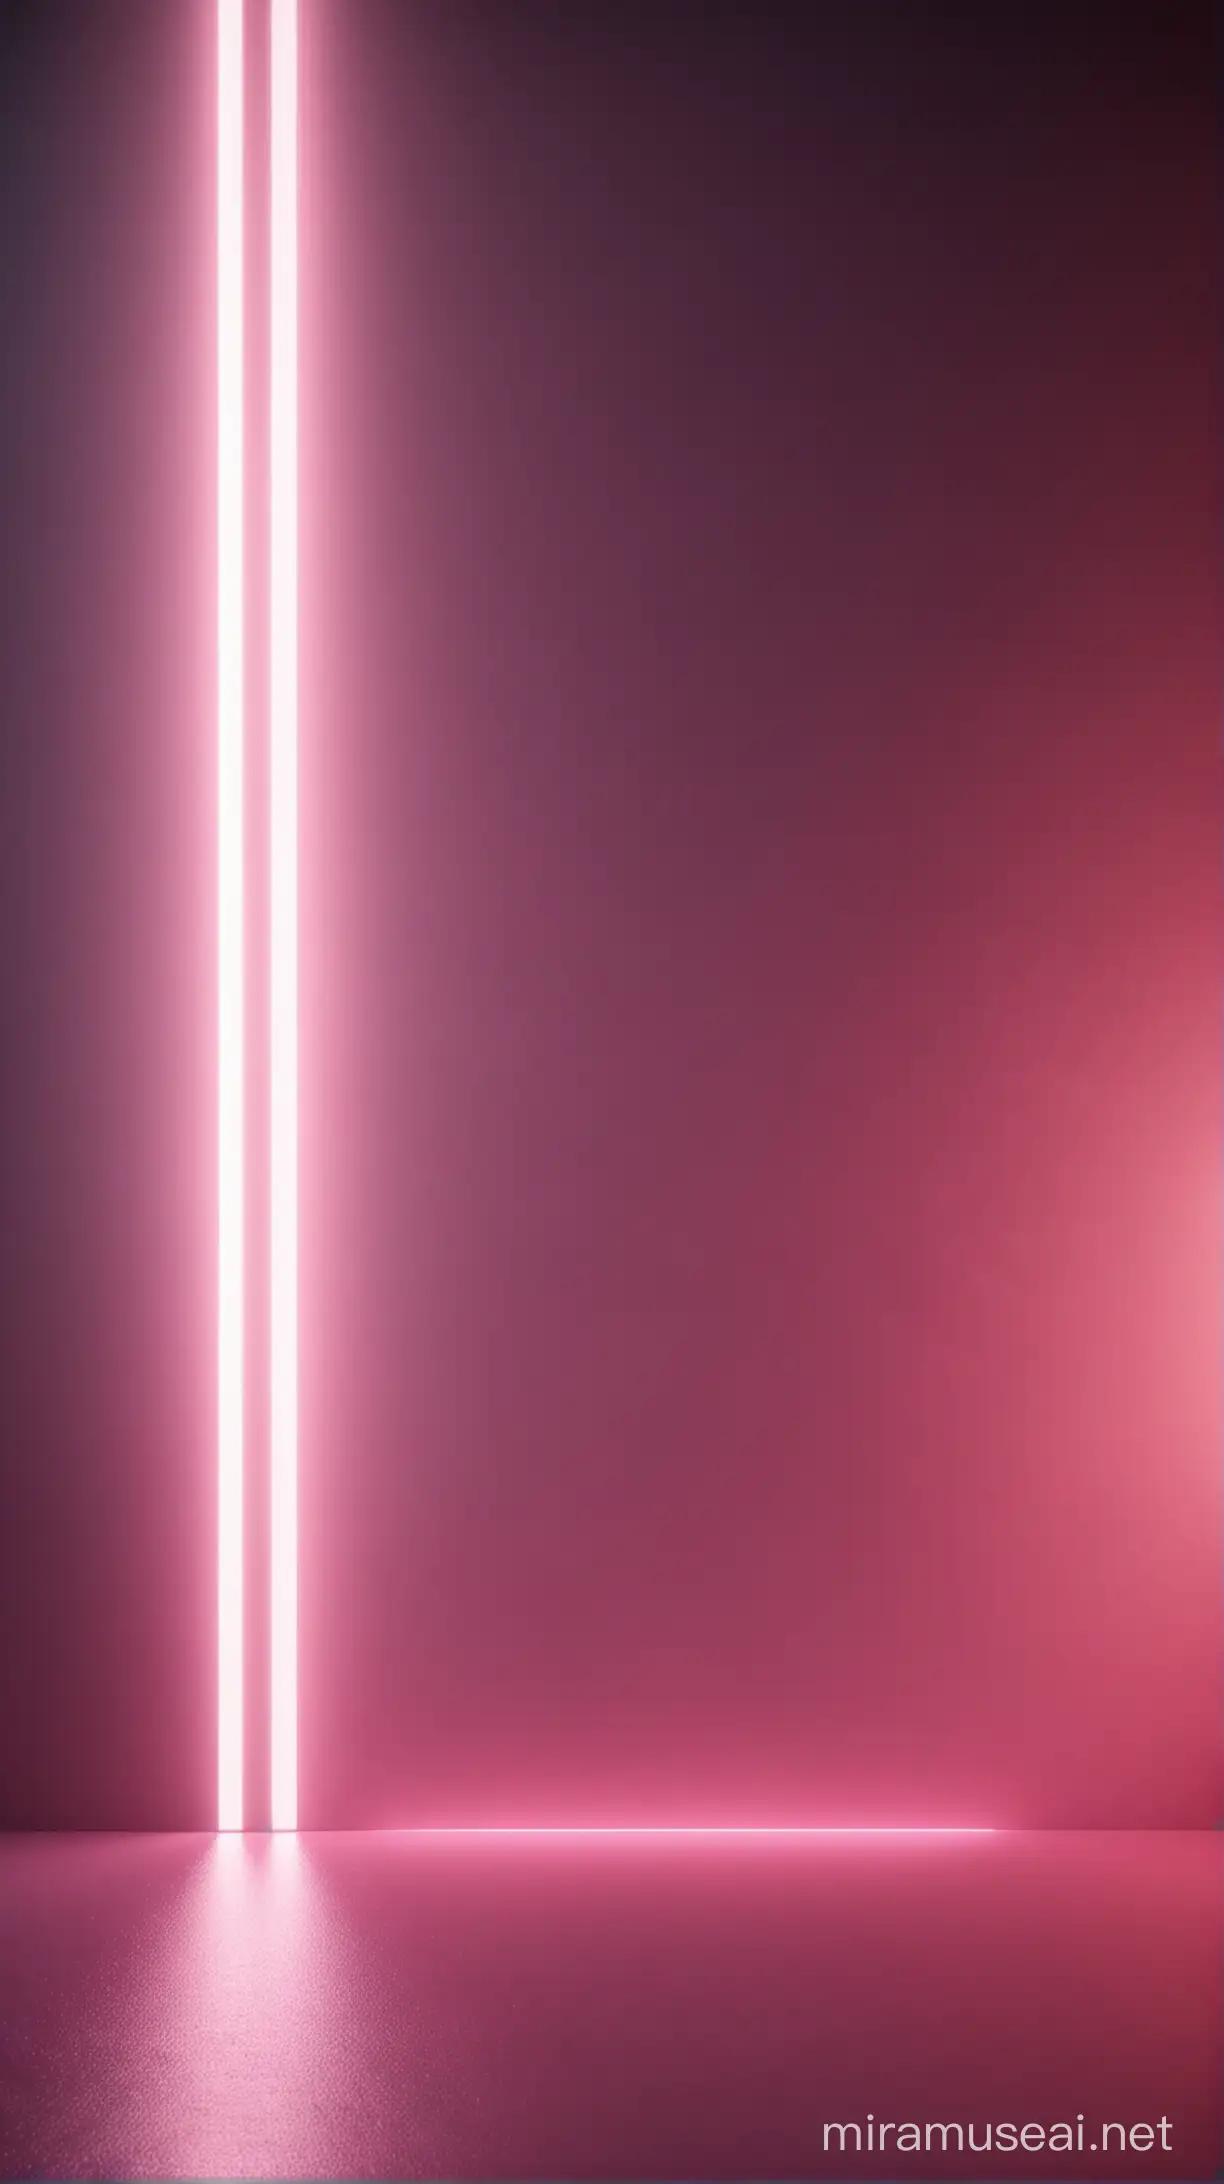 Abstract Volumetric Pink Line Studio Background with Cinematic Lighting